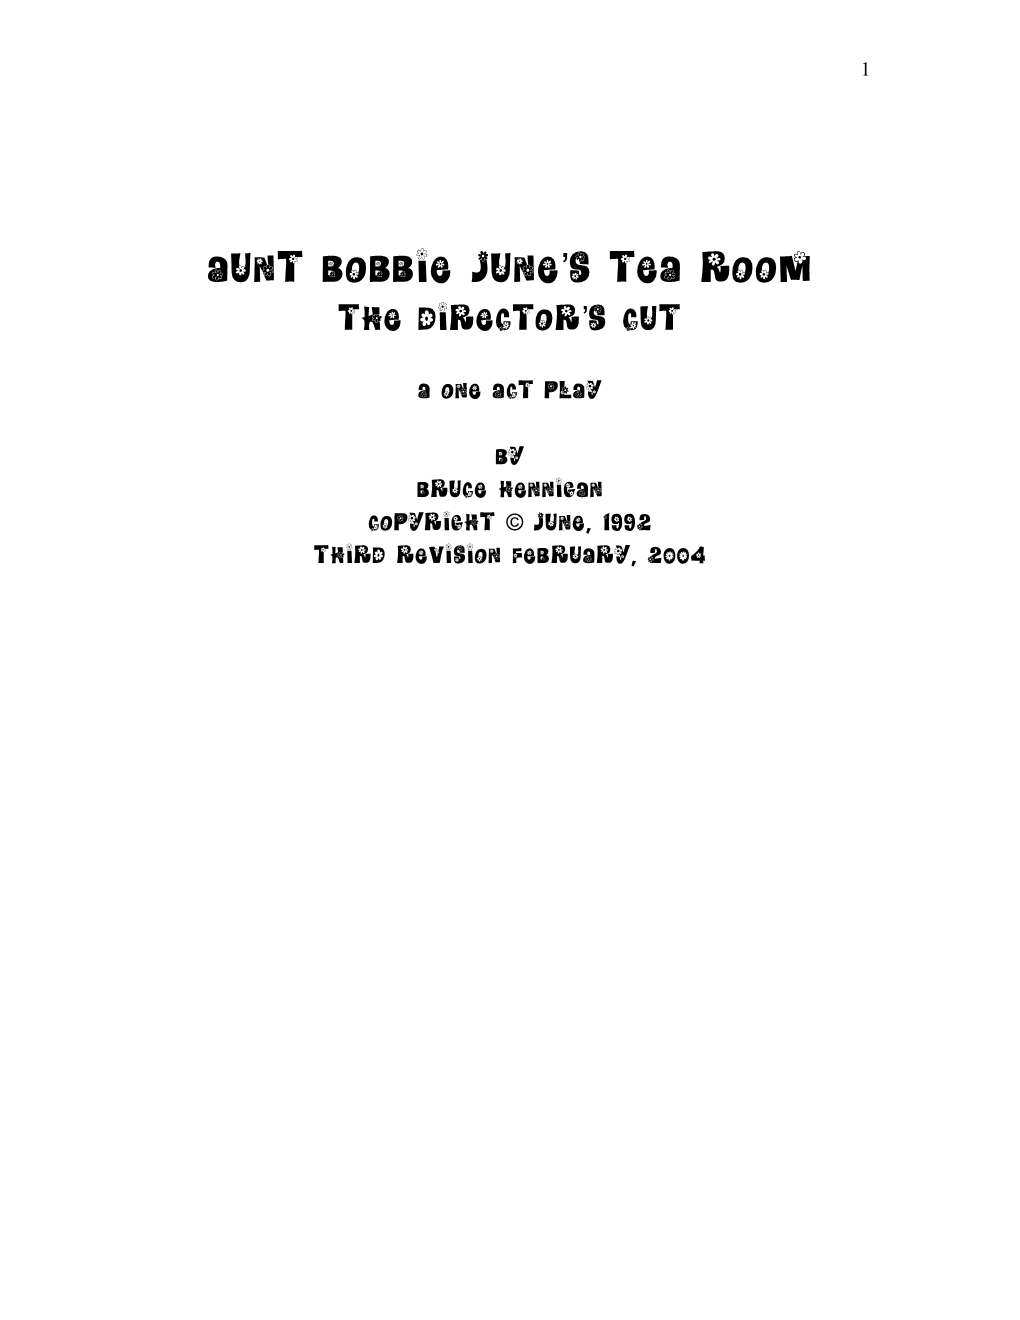 Aunt Bobbie June's Tea Room: the Director’S Cut